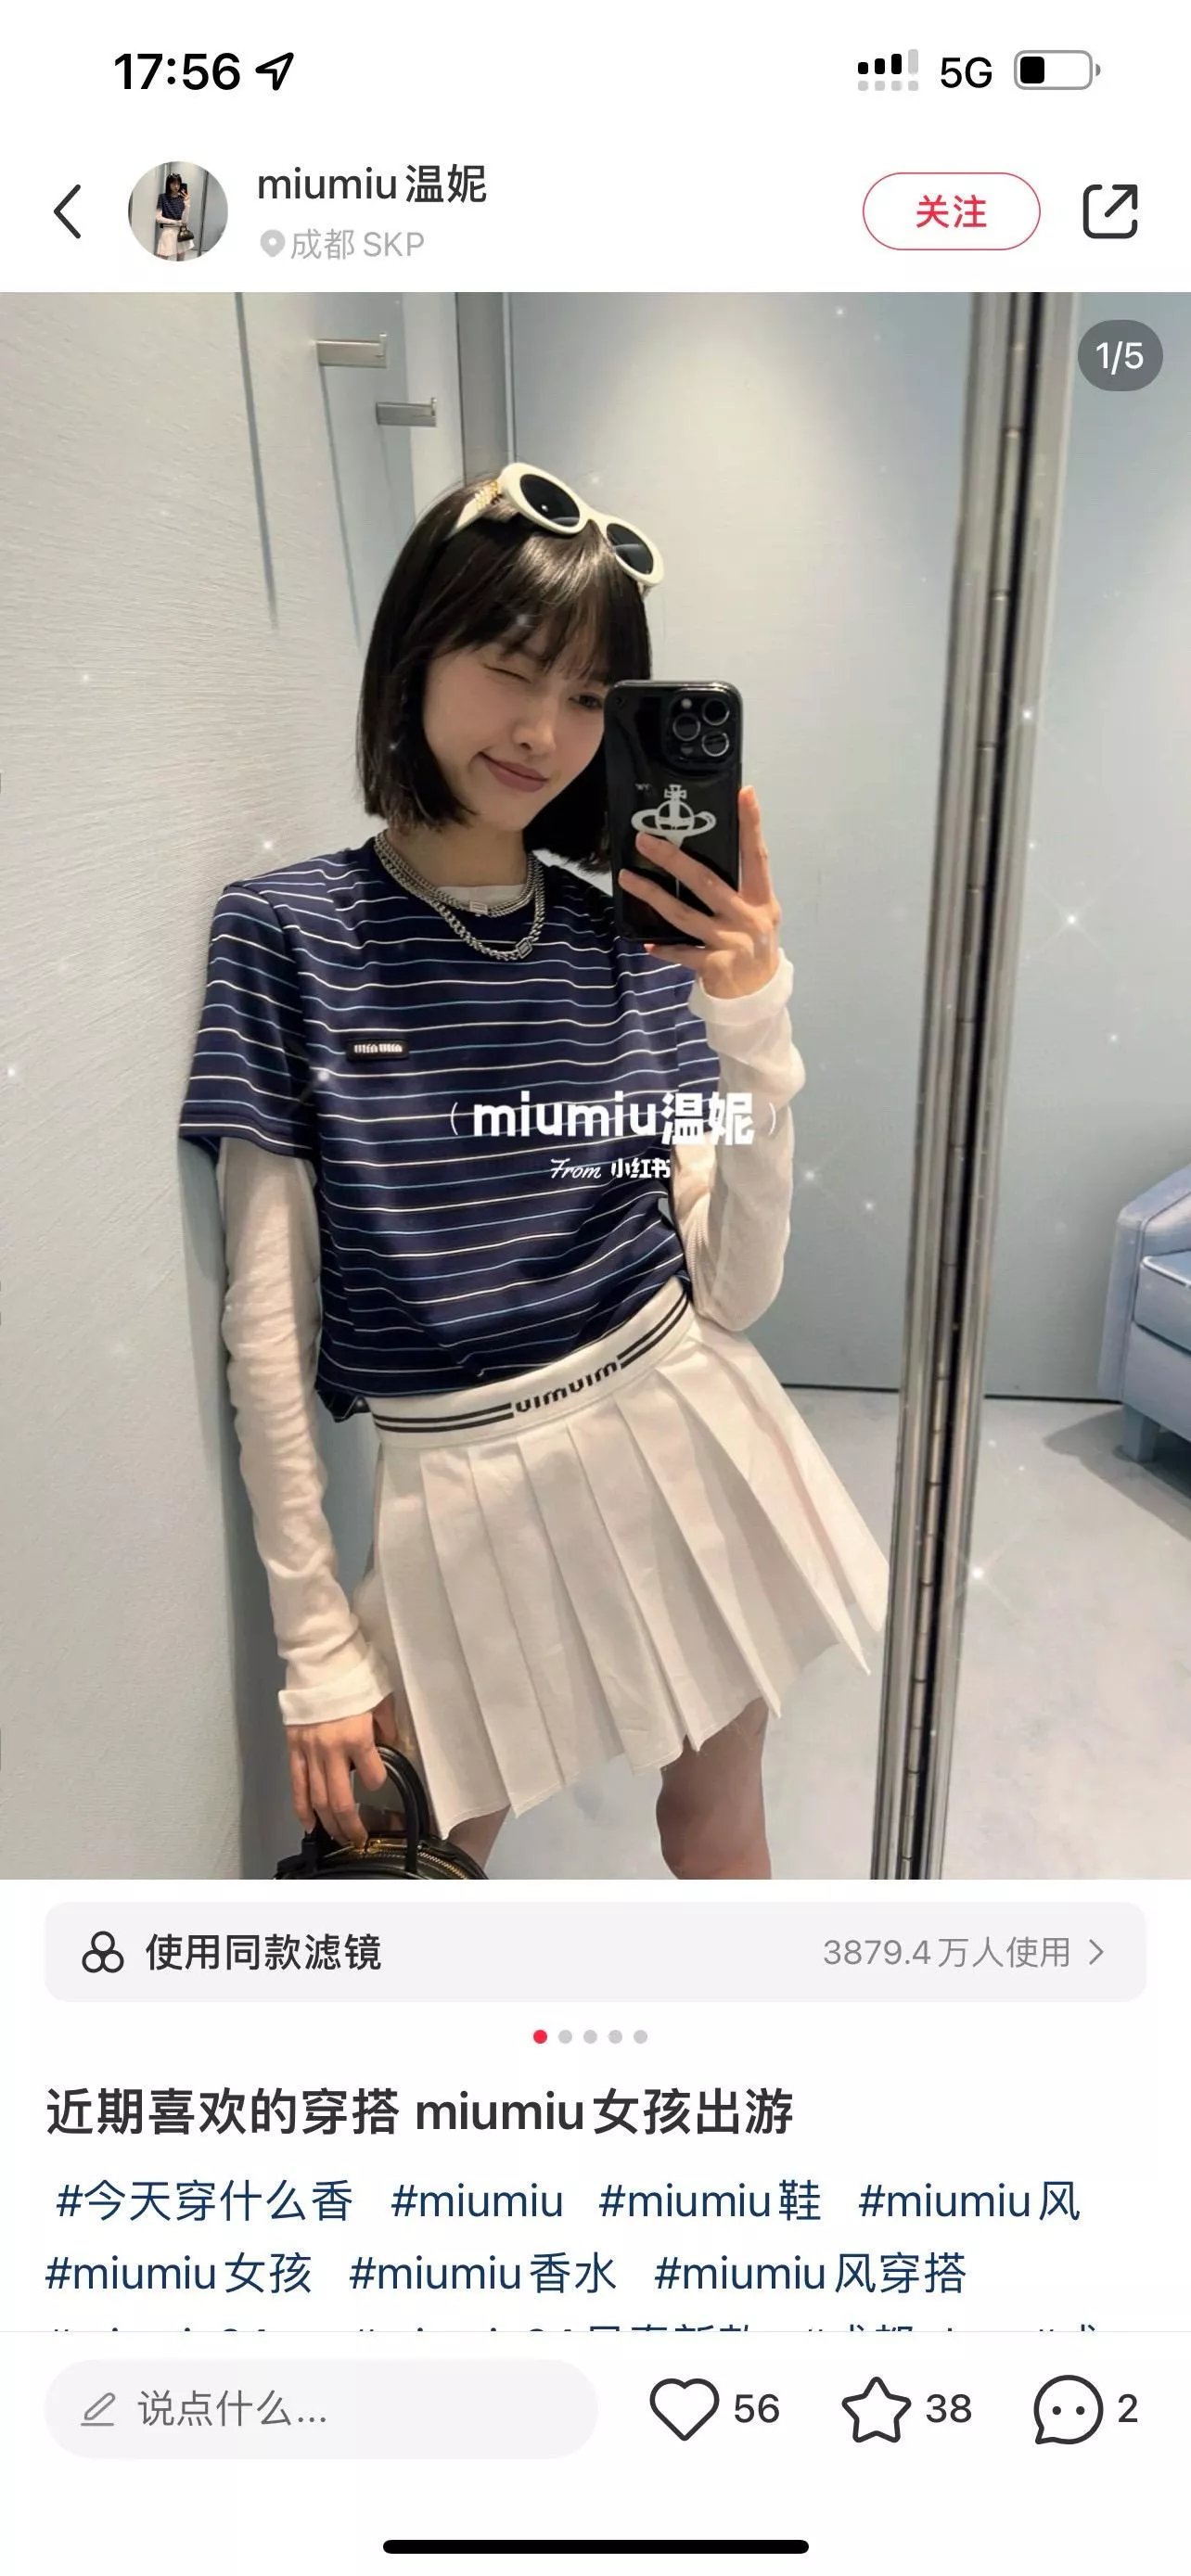 Miumiu 基礎款 百搭款 藍色條紋圓領短袖上衣 T恤 SML